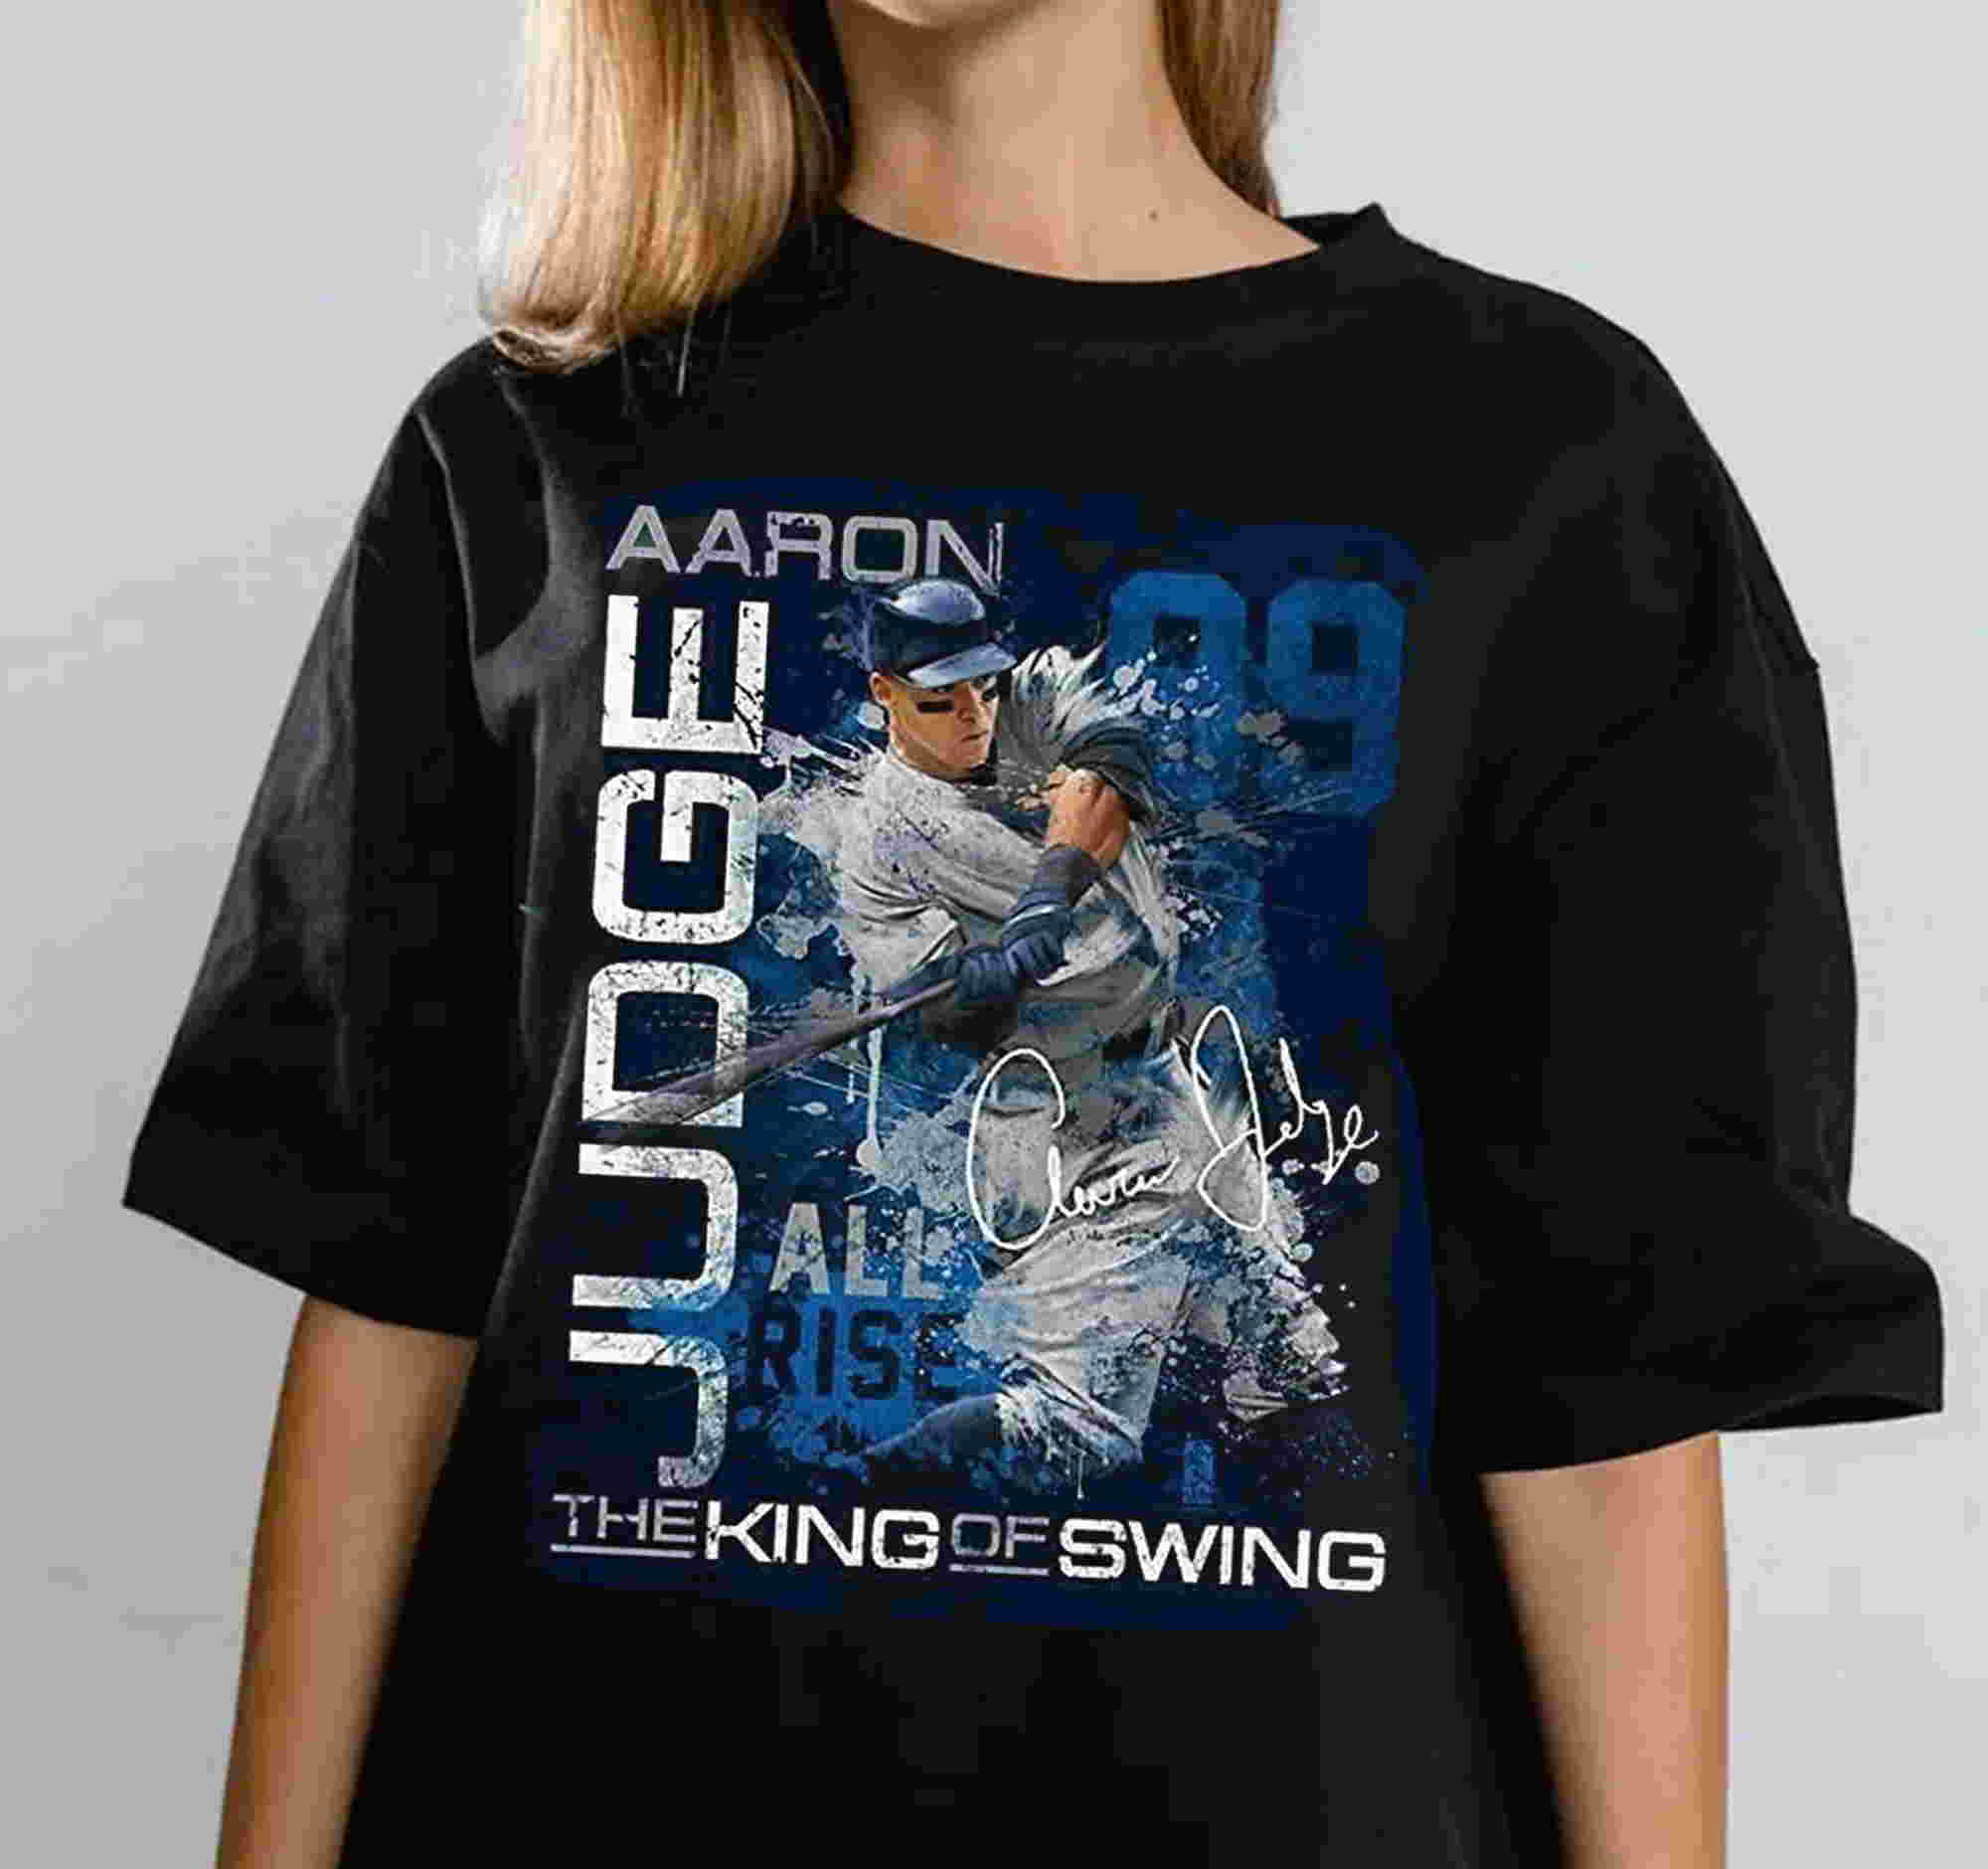 Aaron Judge New York baseball 90s retro t-shirt by To-Tee Clothing